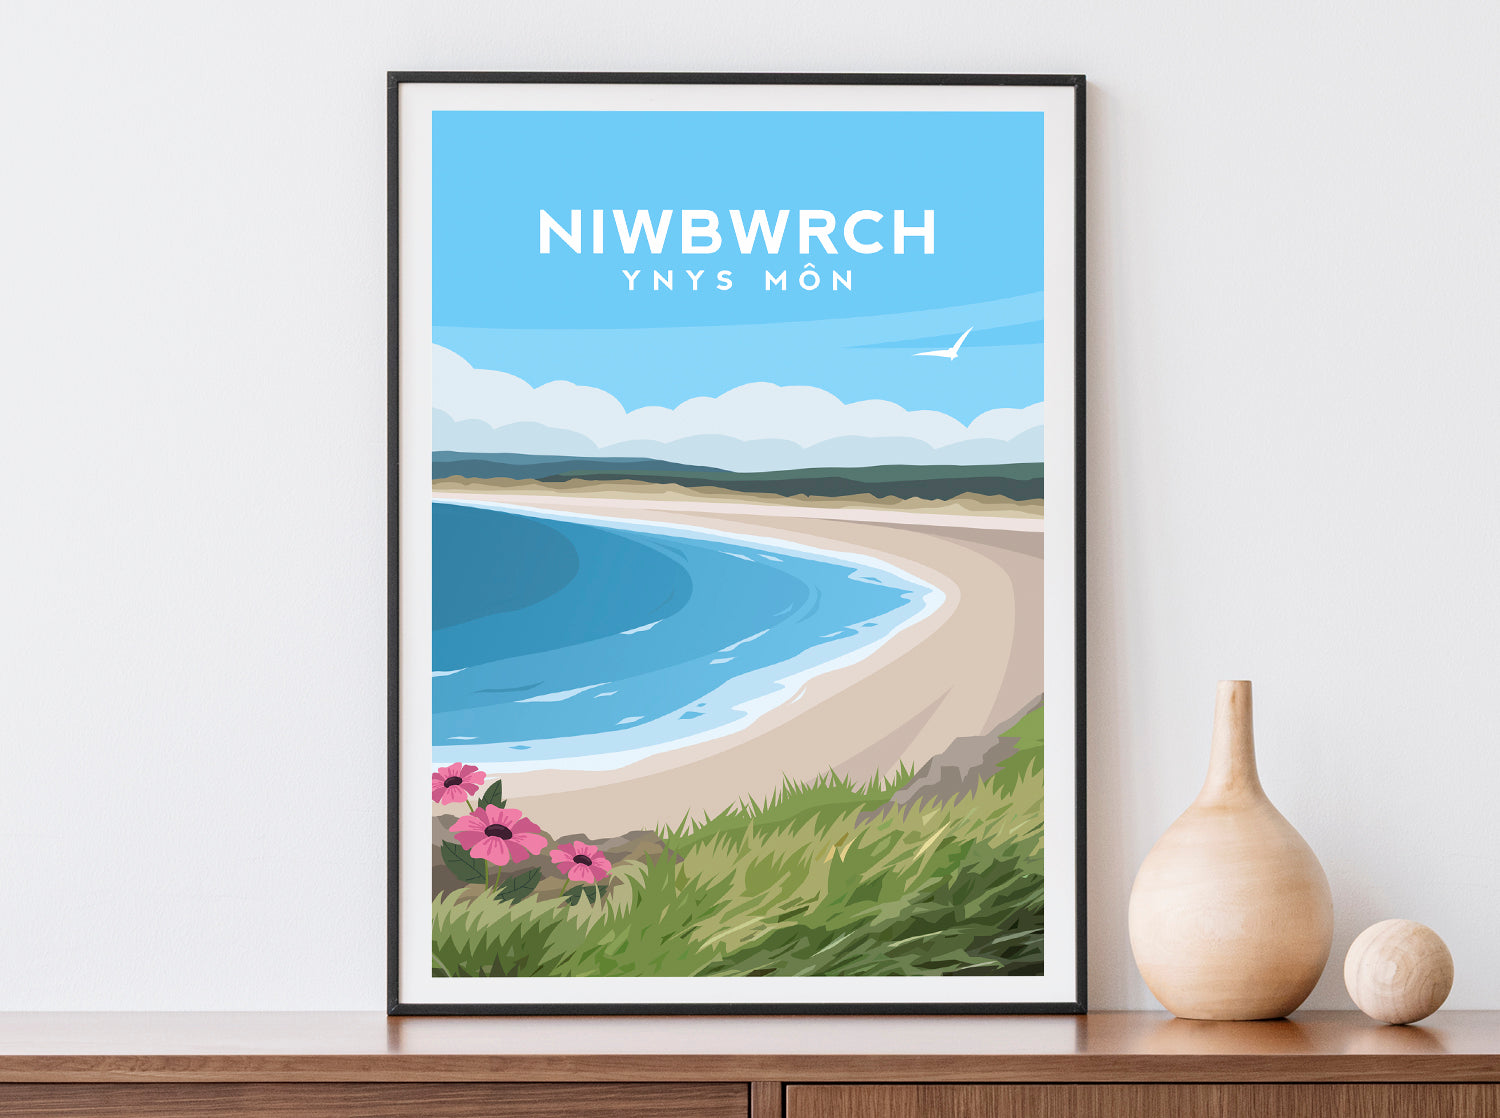 Newborough Beach, Anglesey Wales Travel Print Typelab